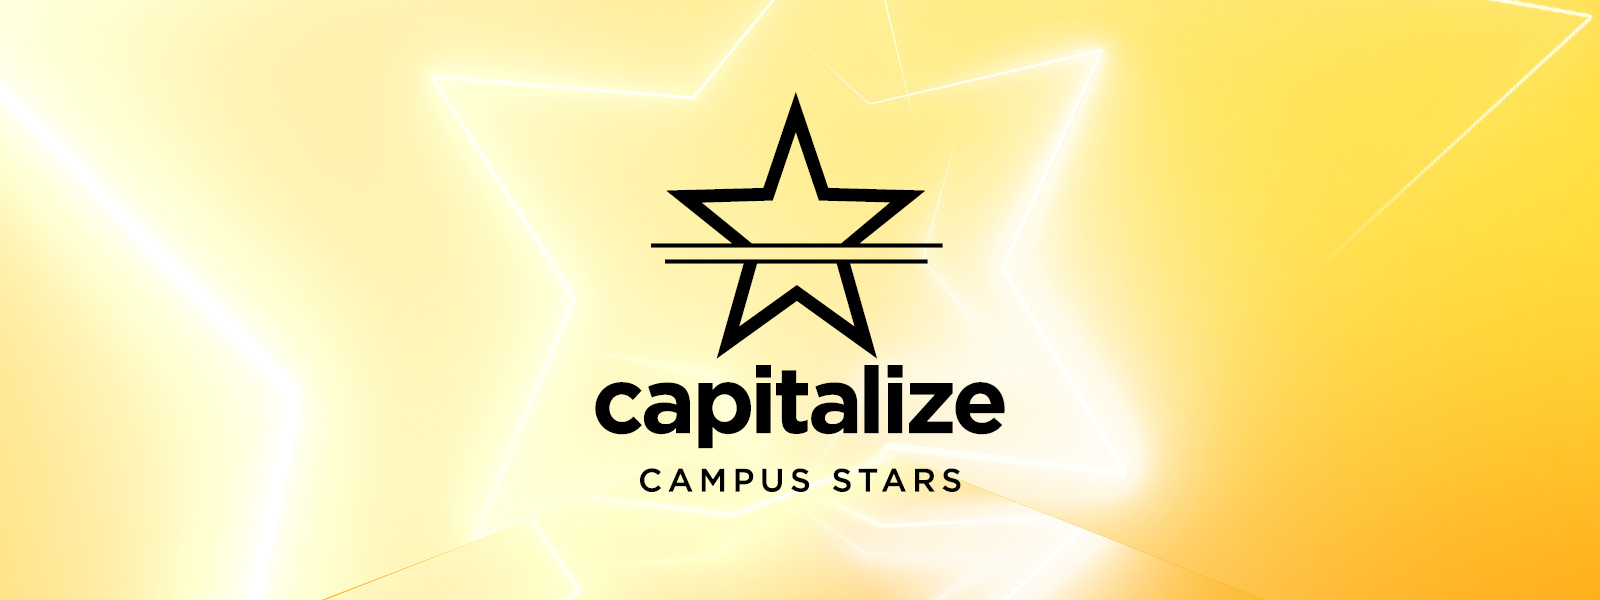 Capitalize campus stars